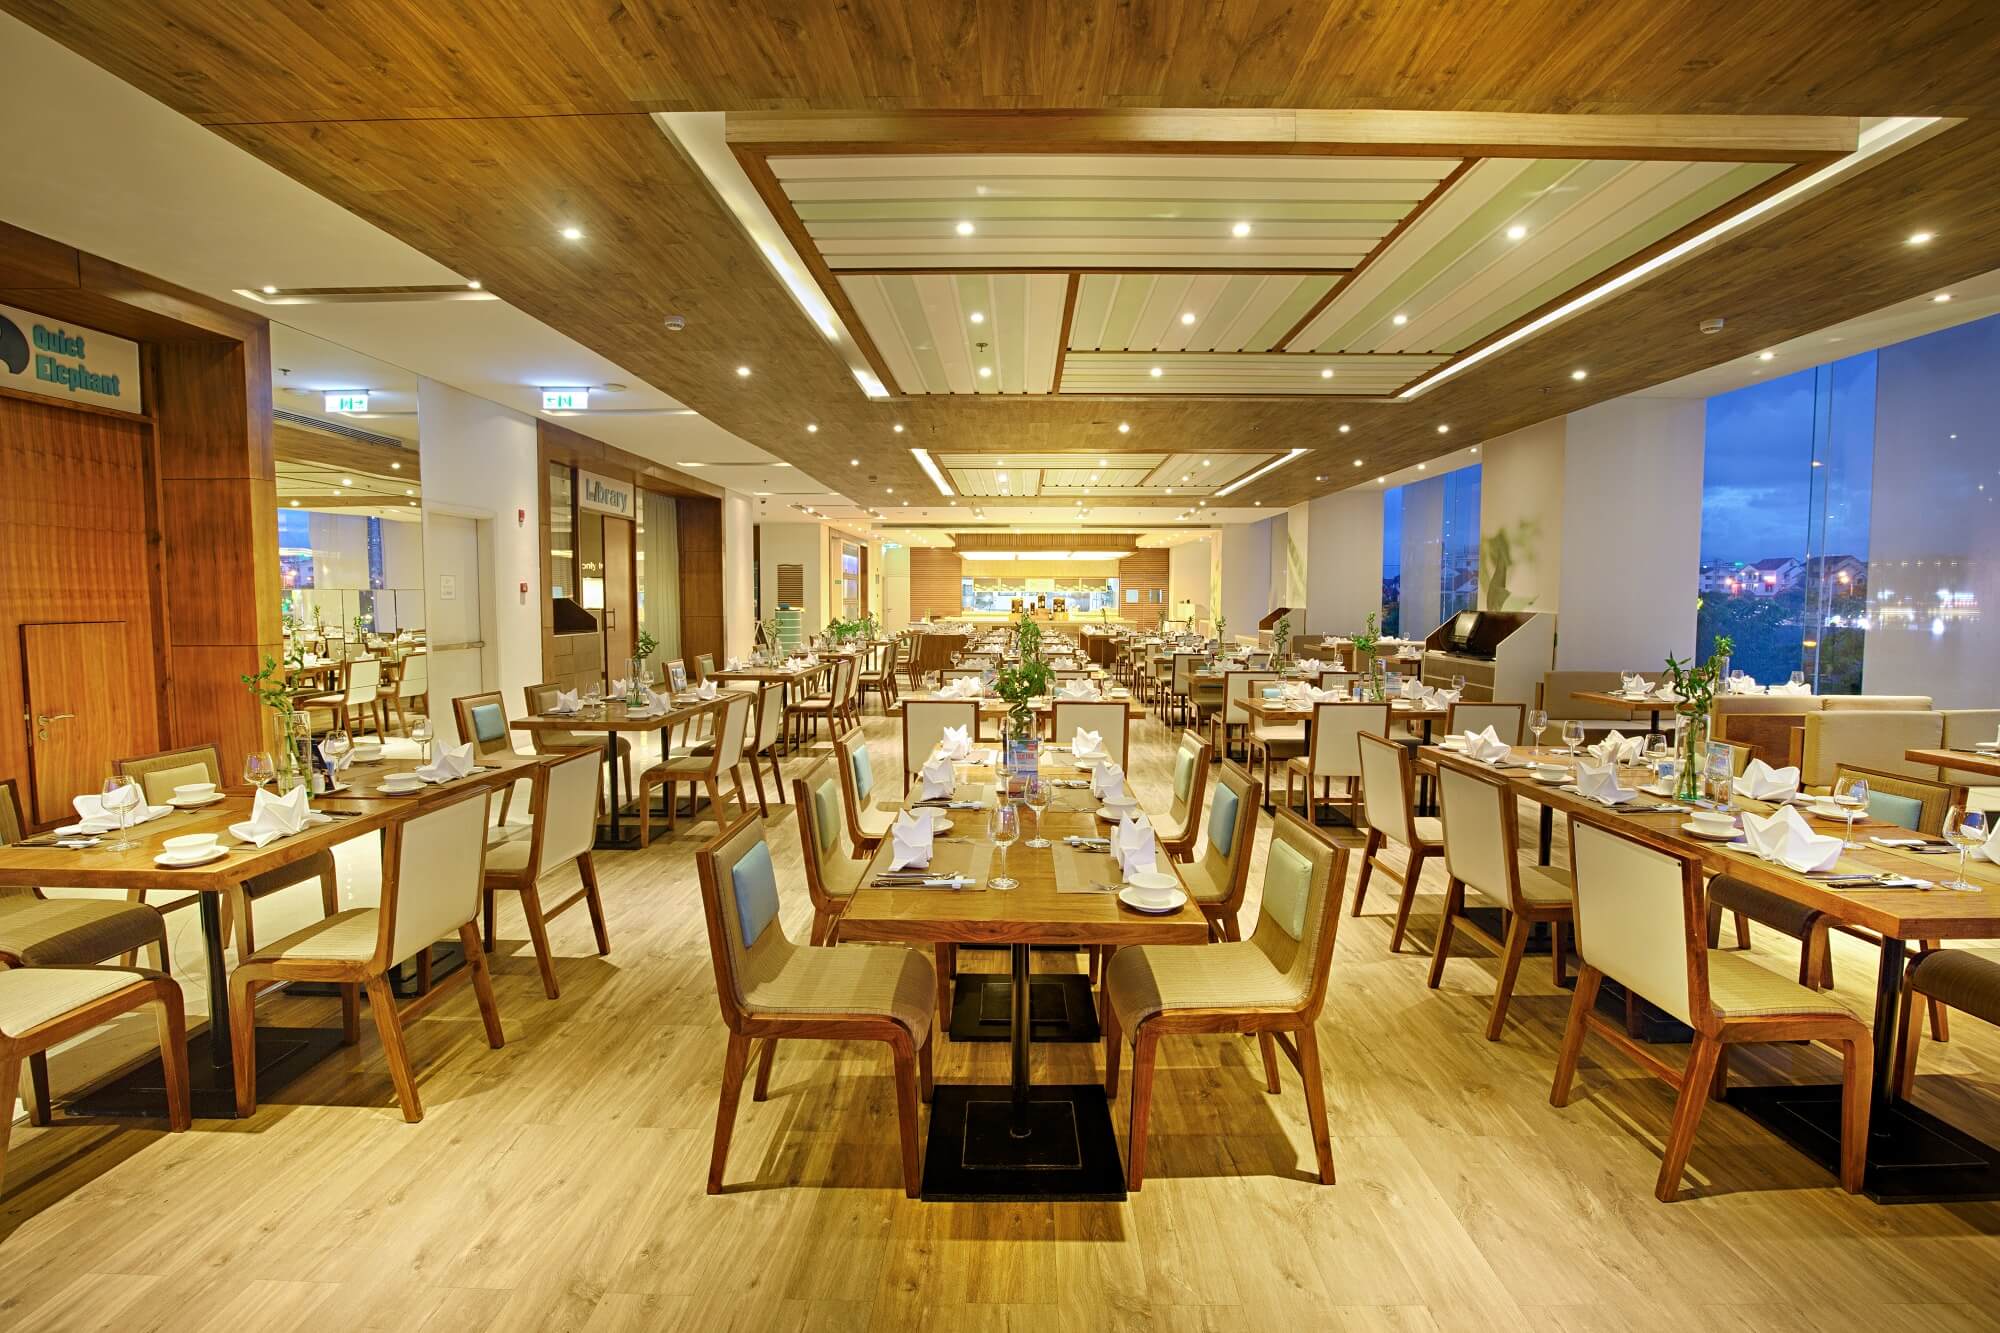 Fisca Restaurant A La Carte Danang Beach Hotel 200 Vo Nguyen Giap Danang Fantasticity Com 02